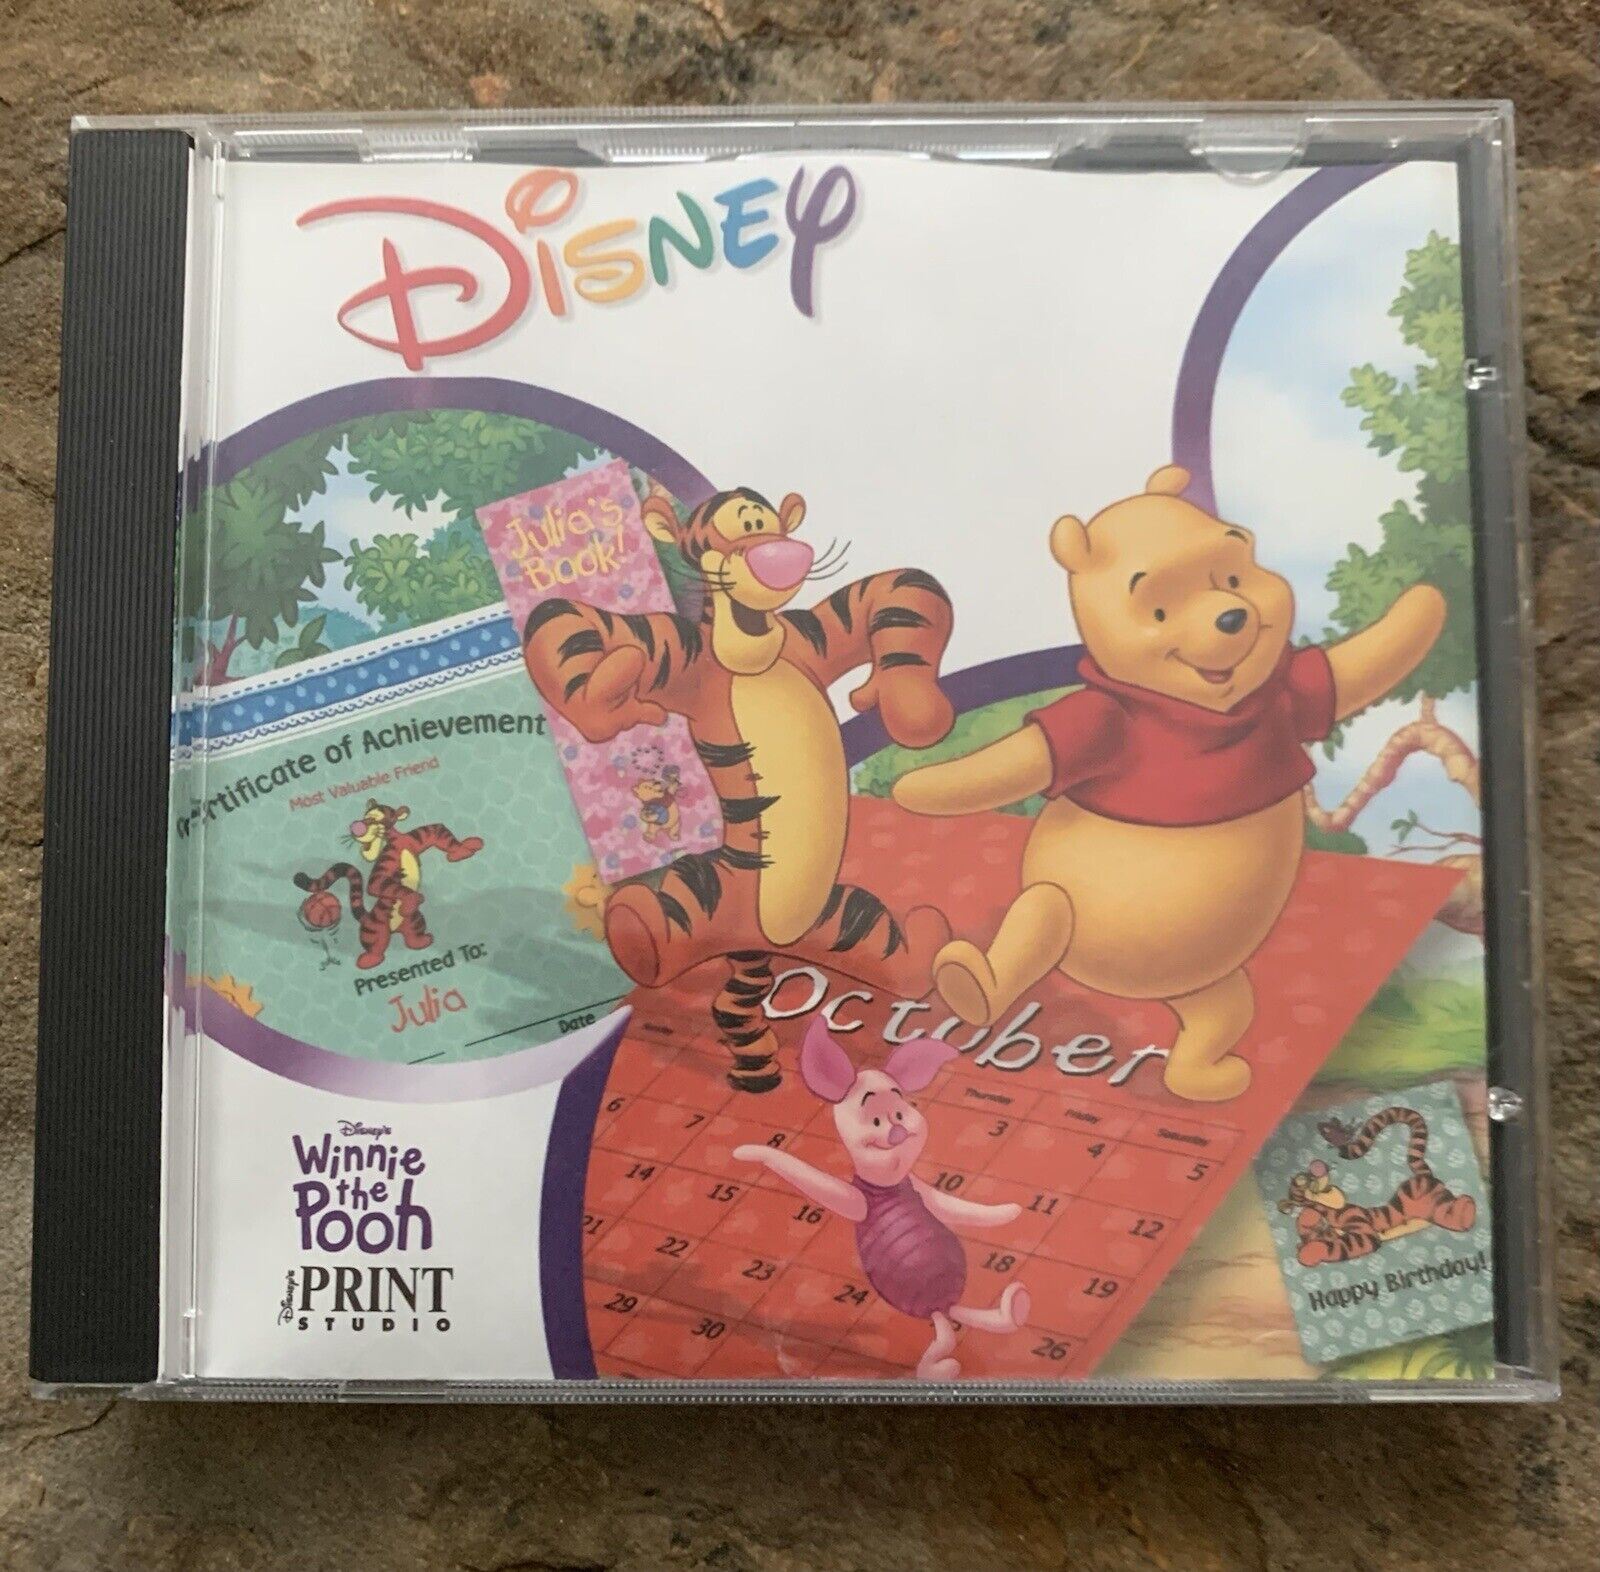 Disney Winnie the Pooh Print Studio CD-Rom. Good conditioned  